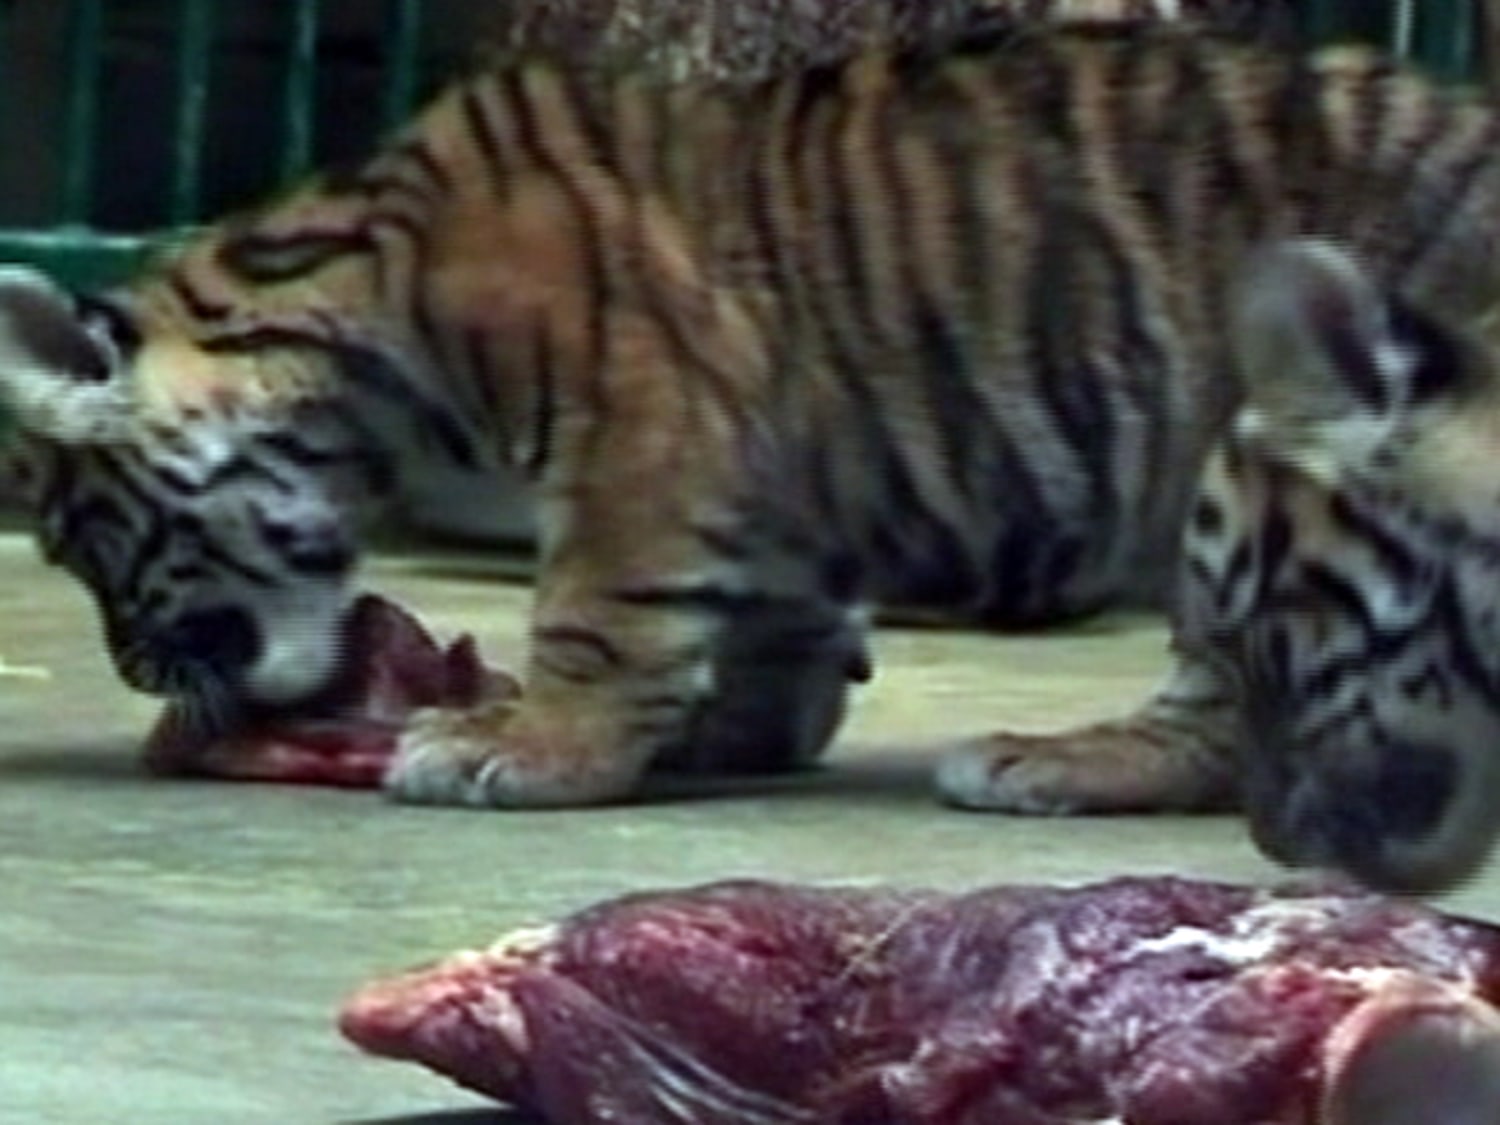 Sumatran Tiger Cub Update: Supplemental Feeding